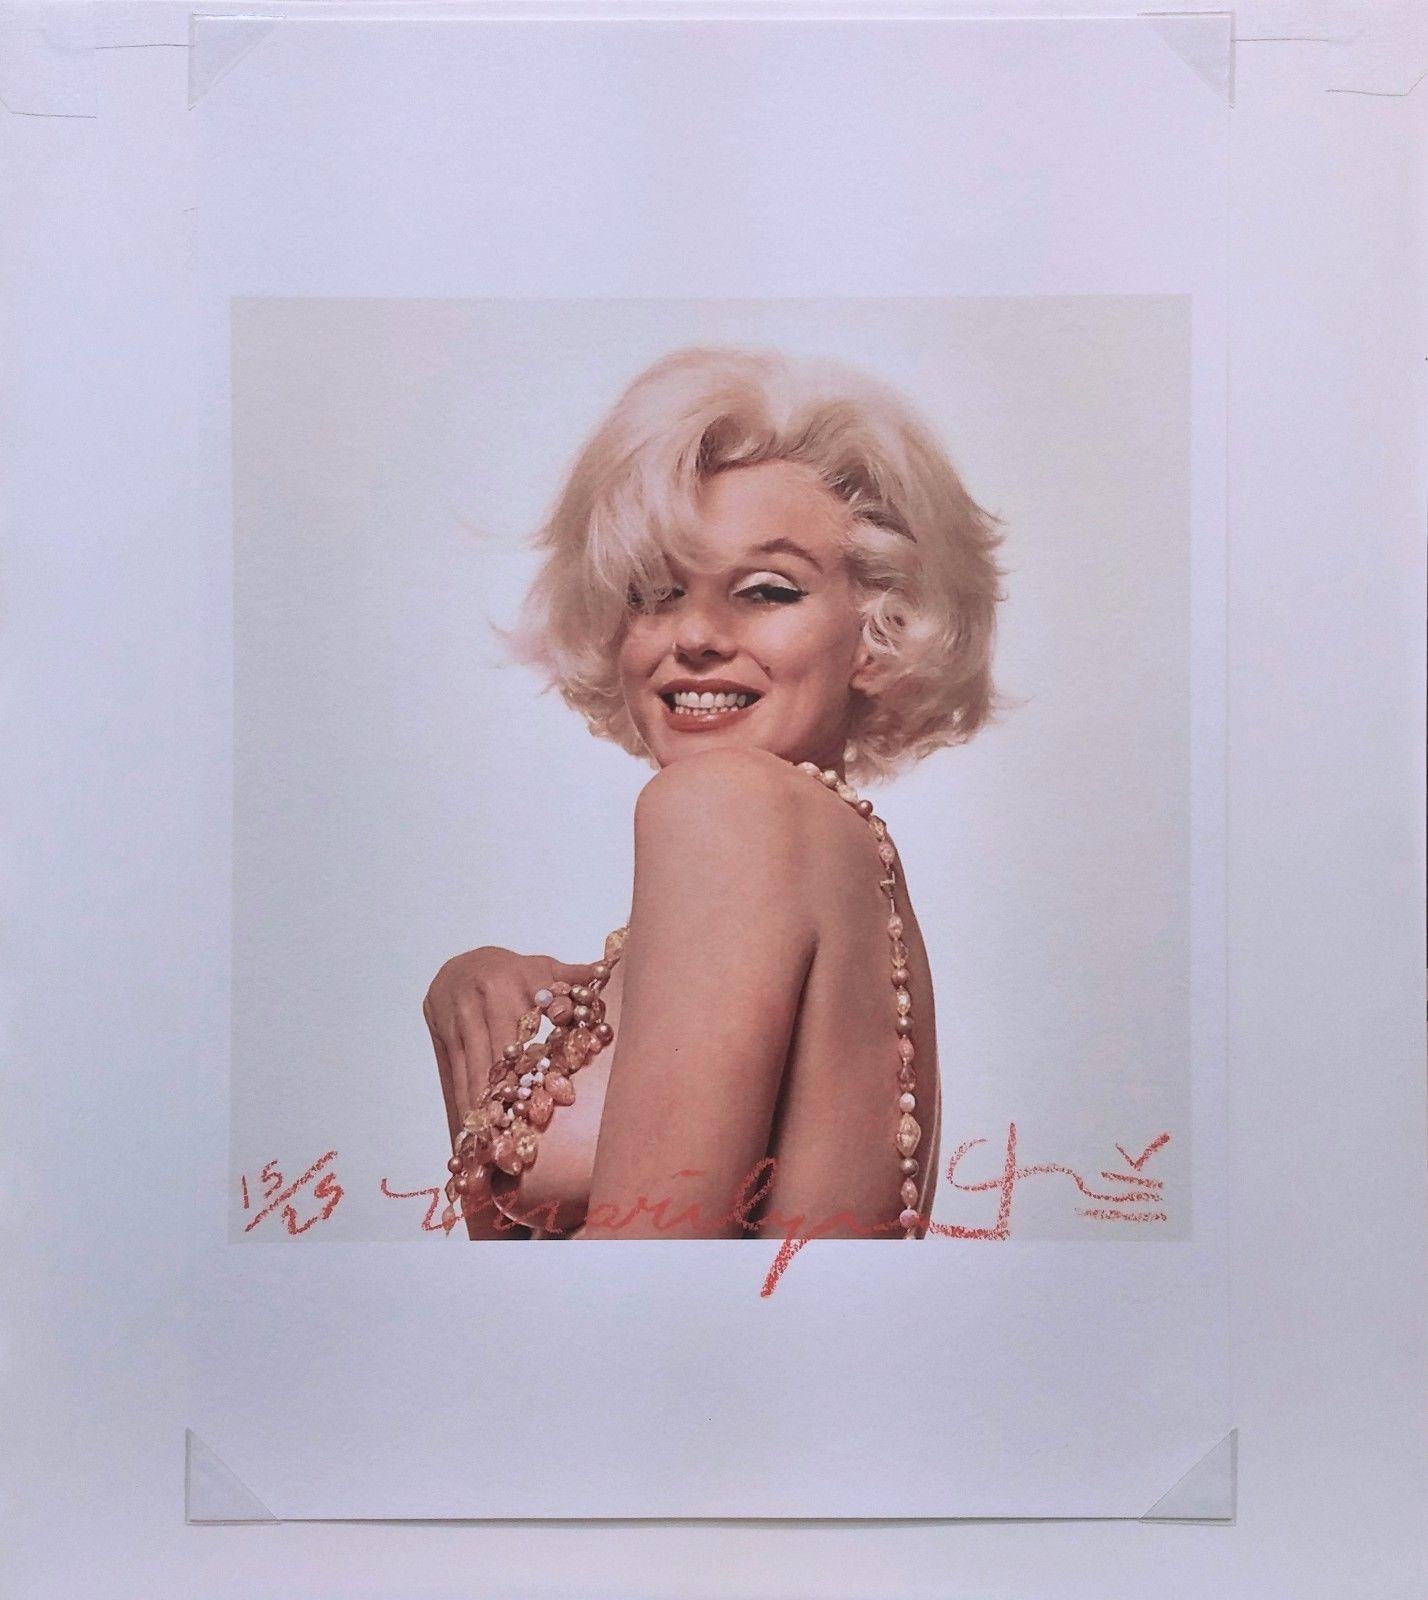 MARILYN MONROE THAT FAMOUS SMILE - Print by Bert Stern